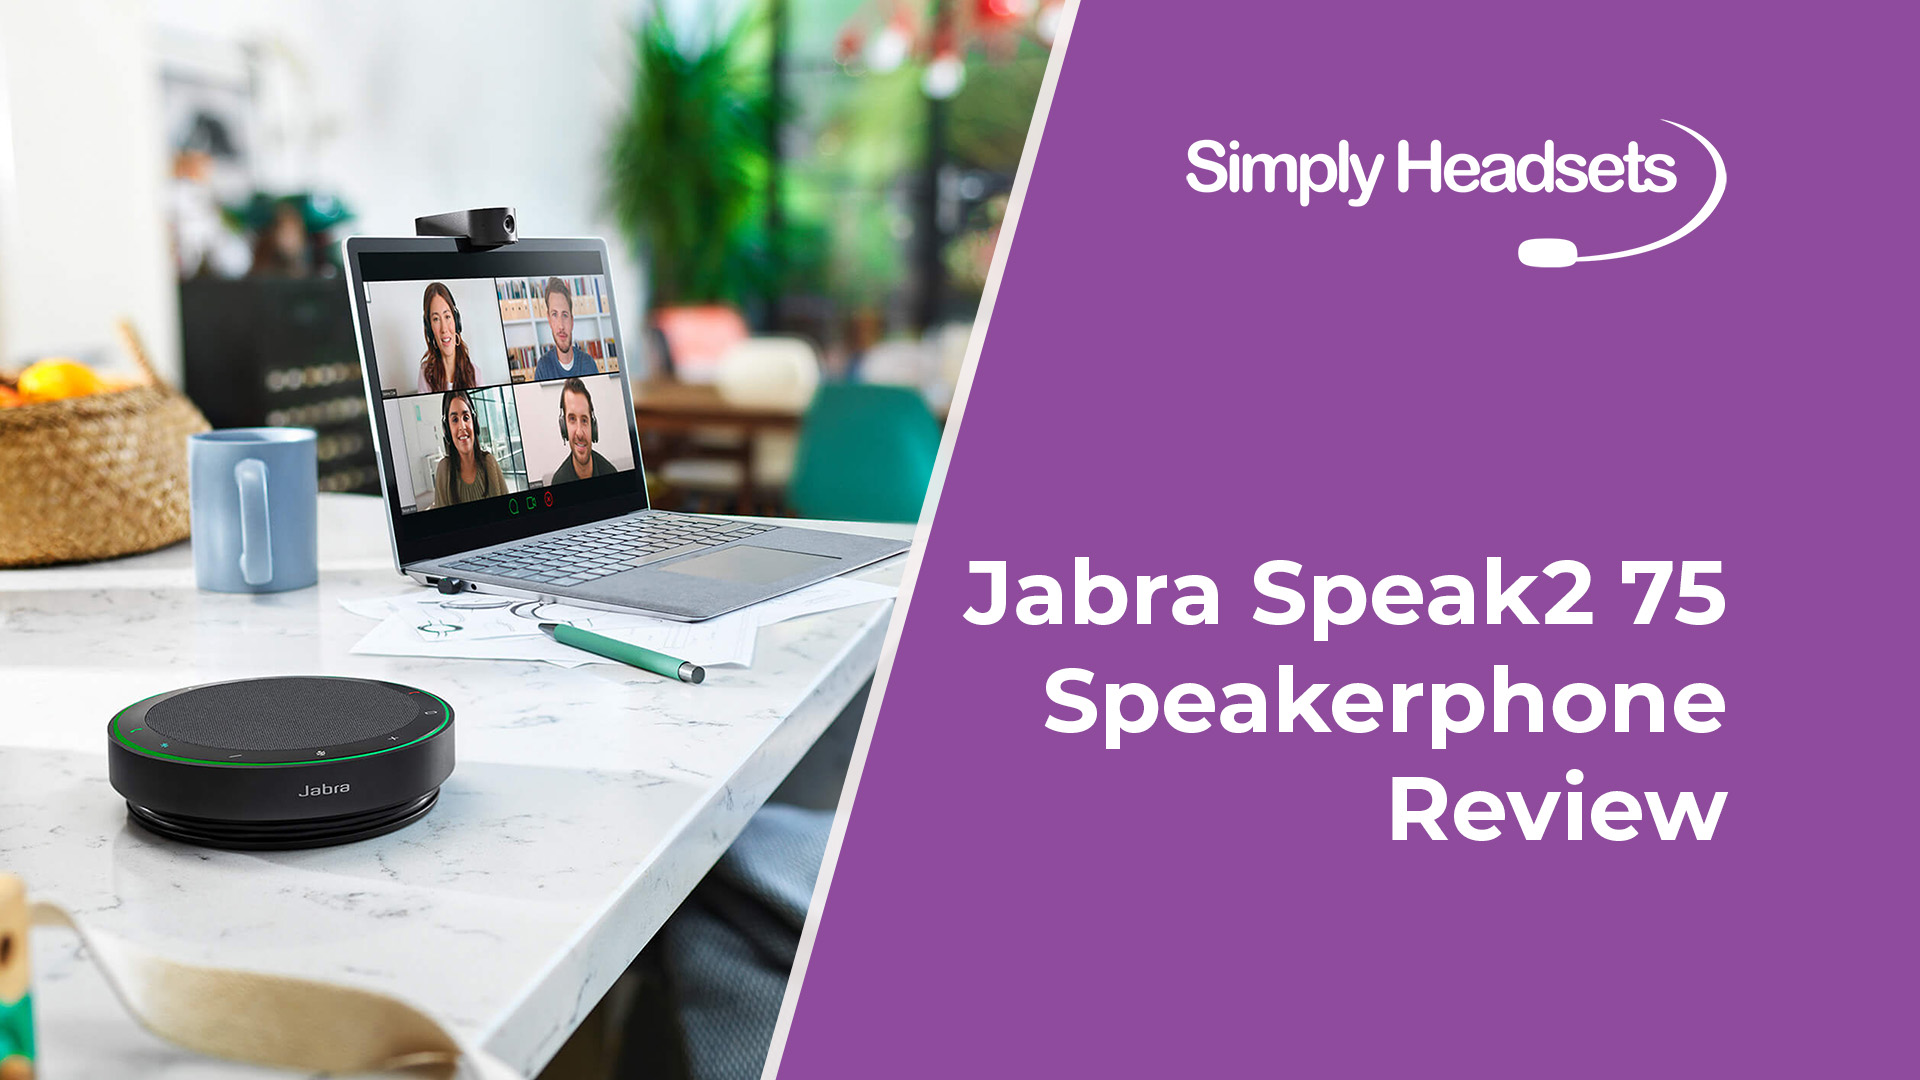 Jabra Speak2 75 speakerphone on desk next to laptop